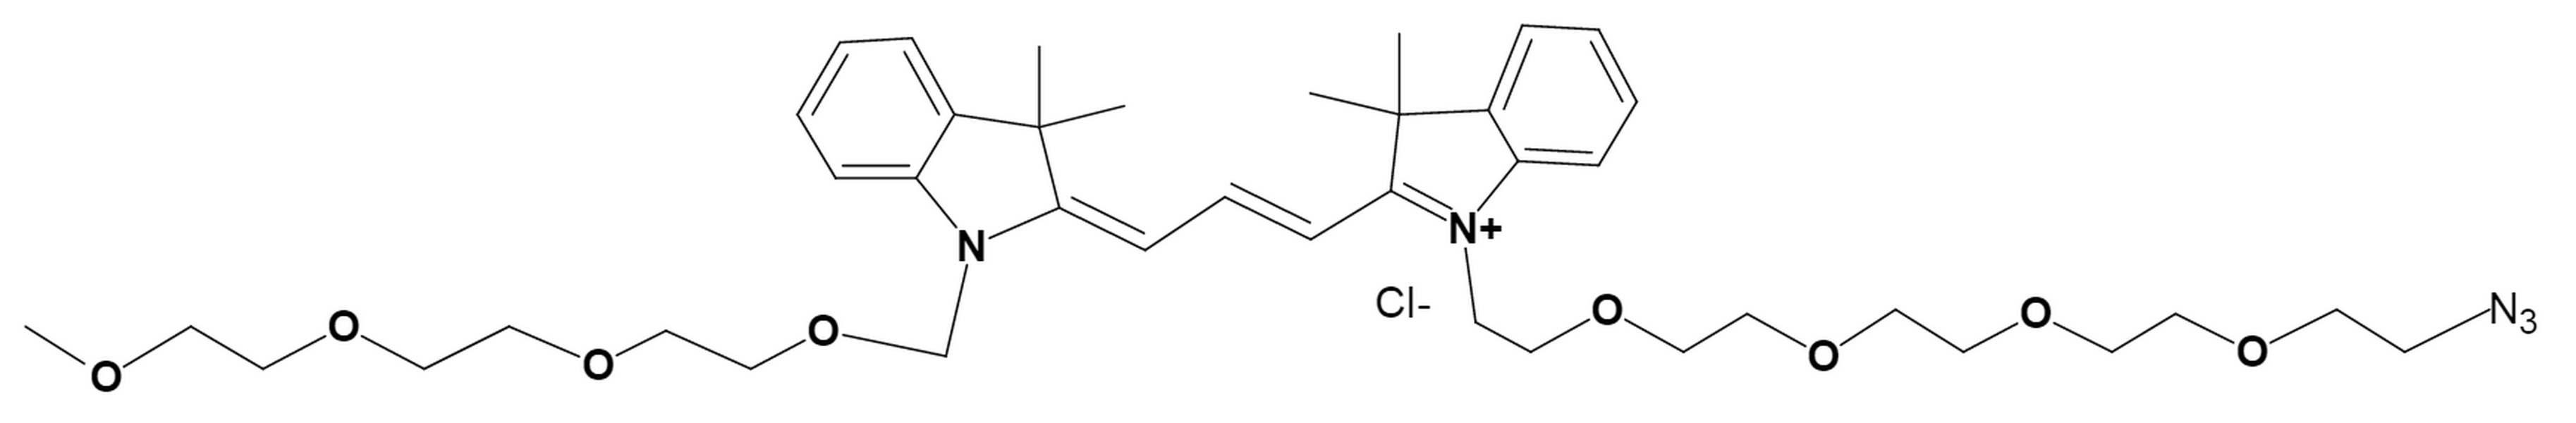 N-(m-PEG4)-N'-(azide-PEG4)-Cy3